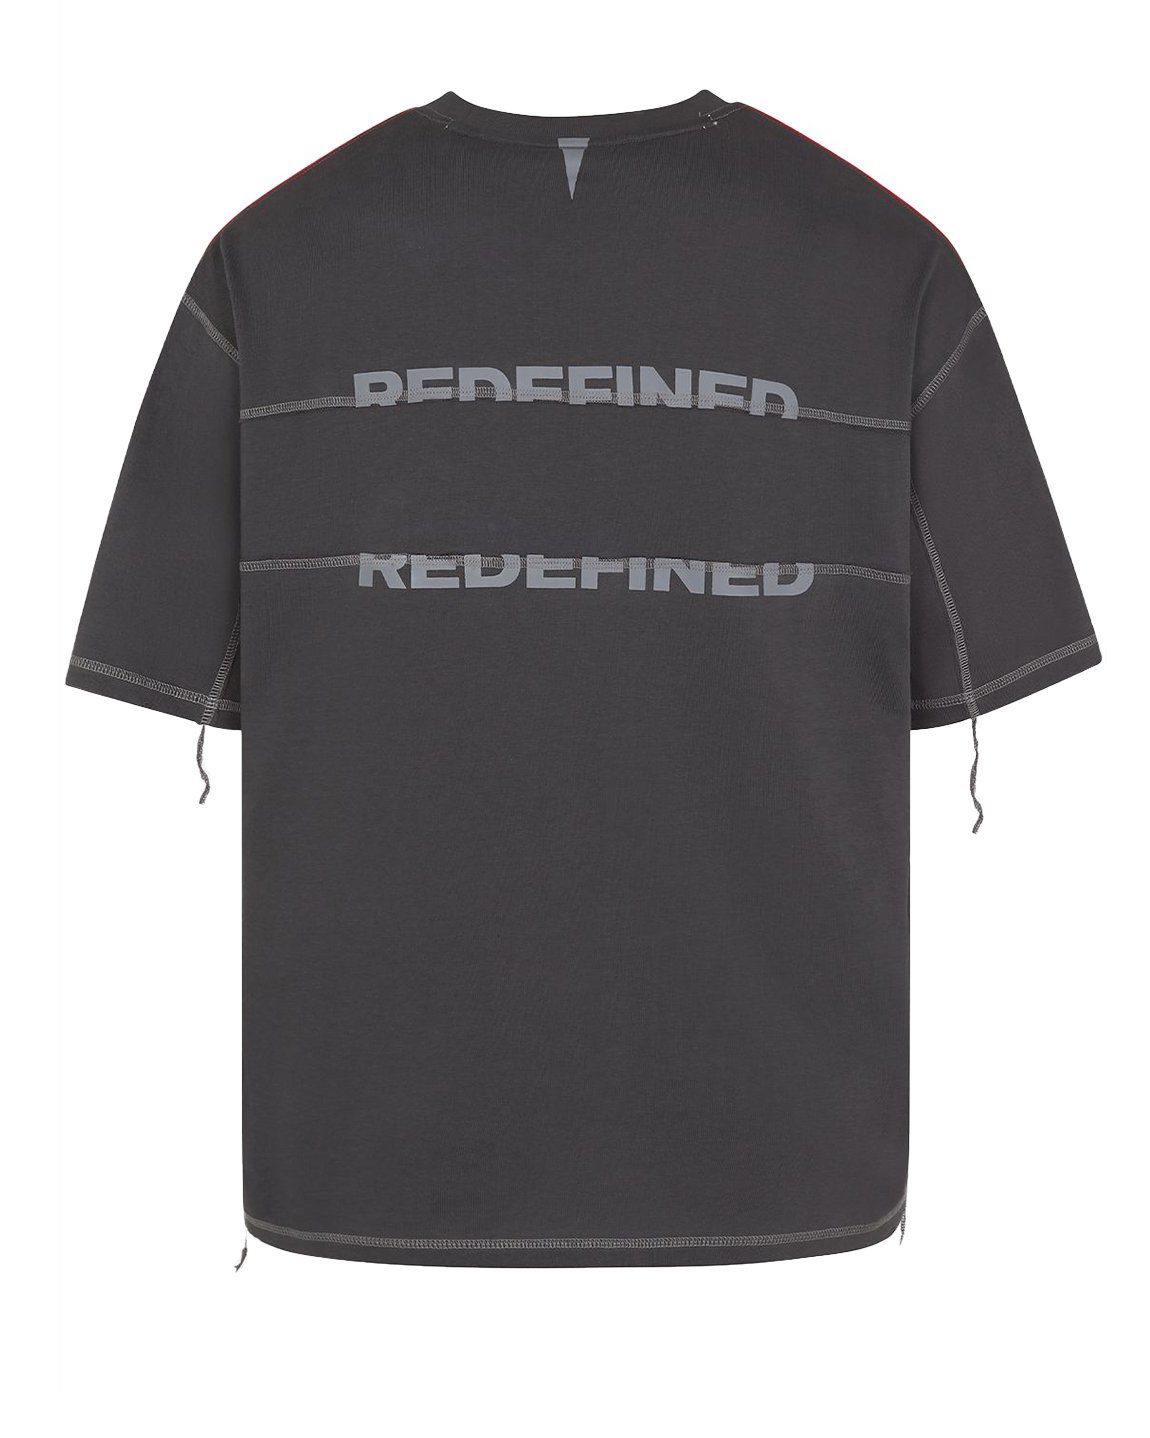 - Shirt / Logo Oversize Fila Regular Fit Rundhalsshirt S11 RUINED